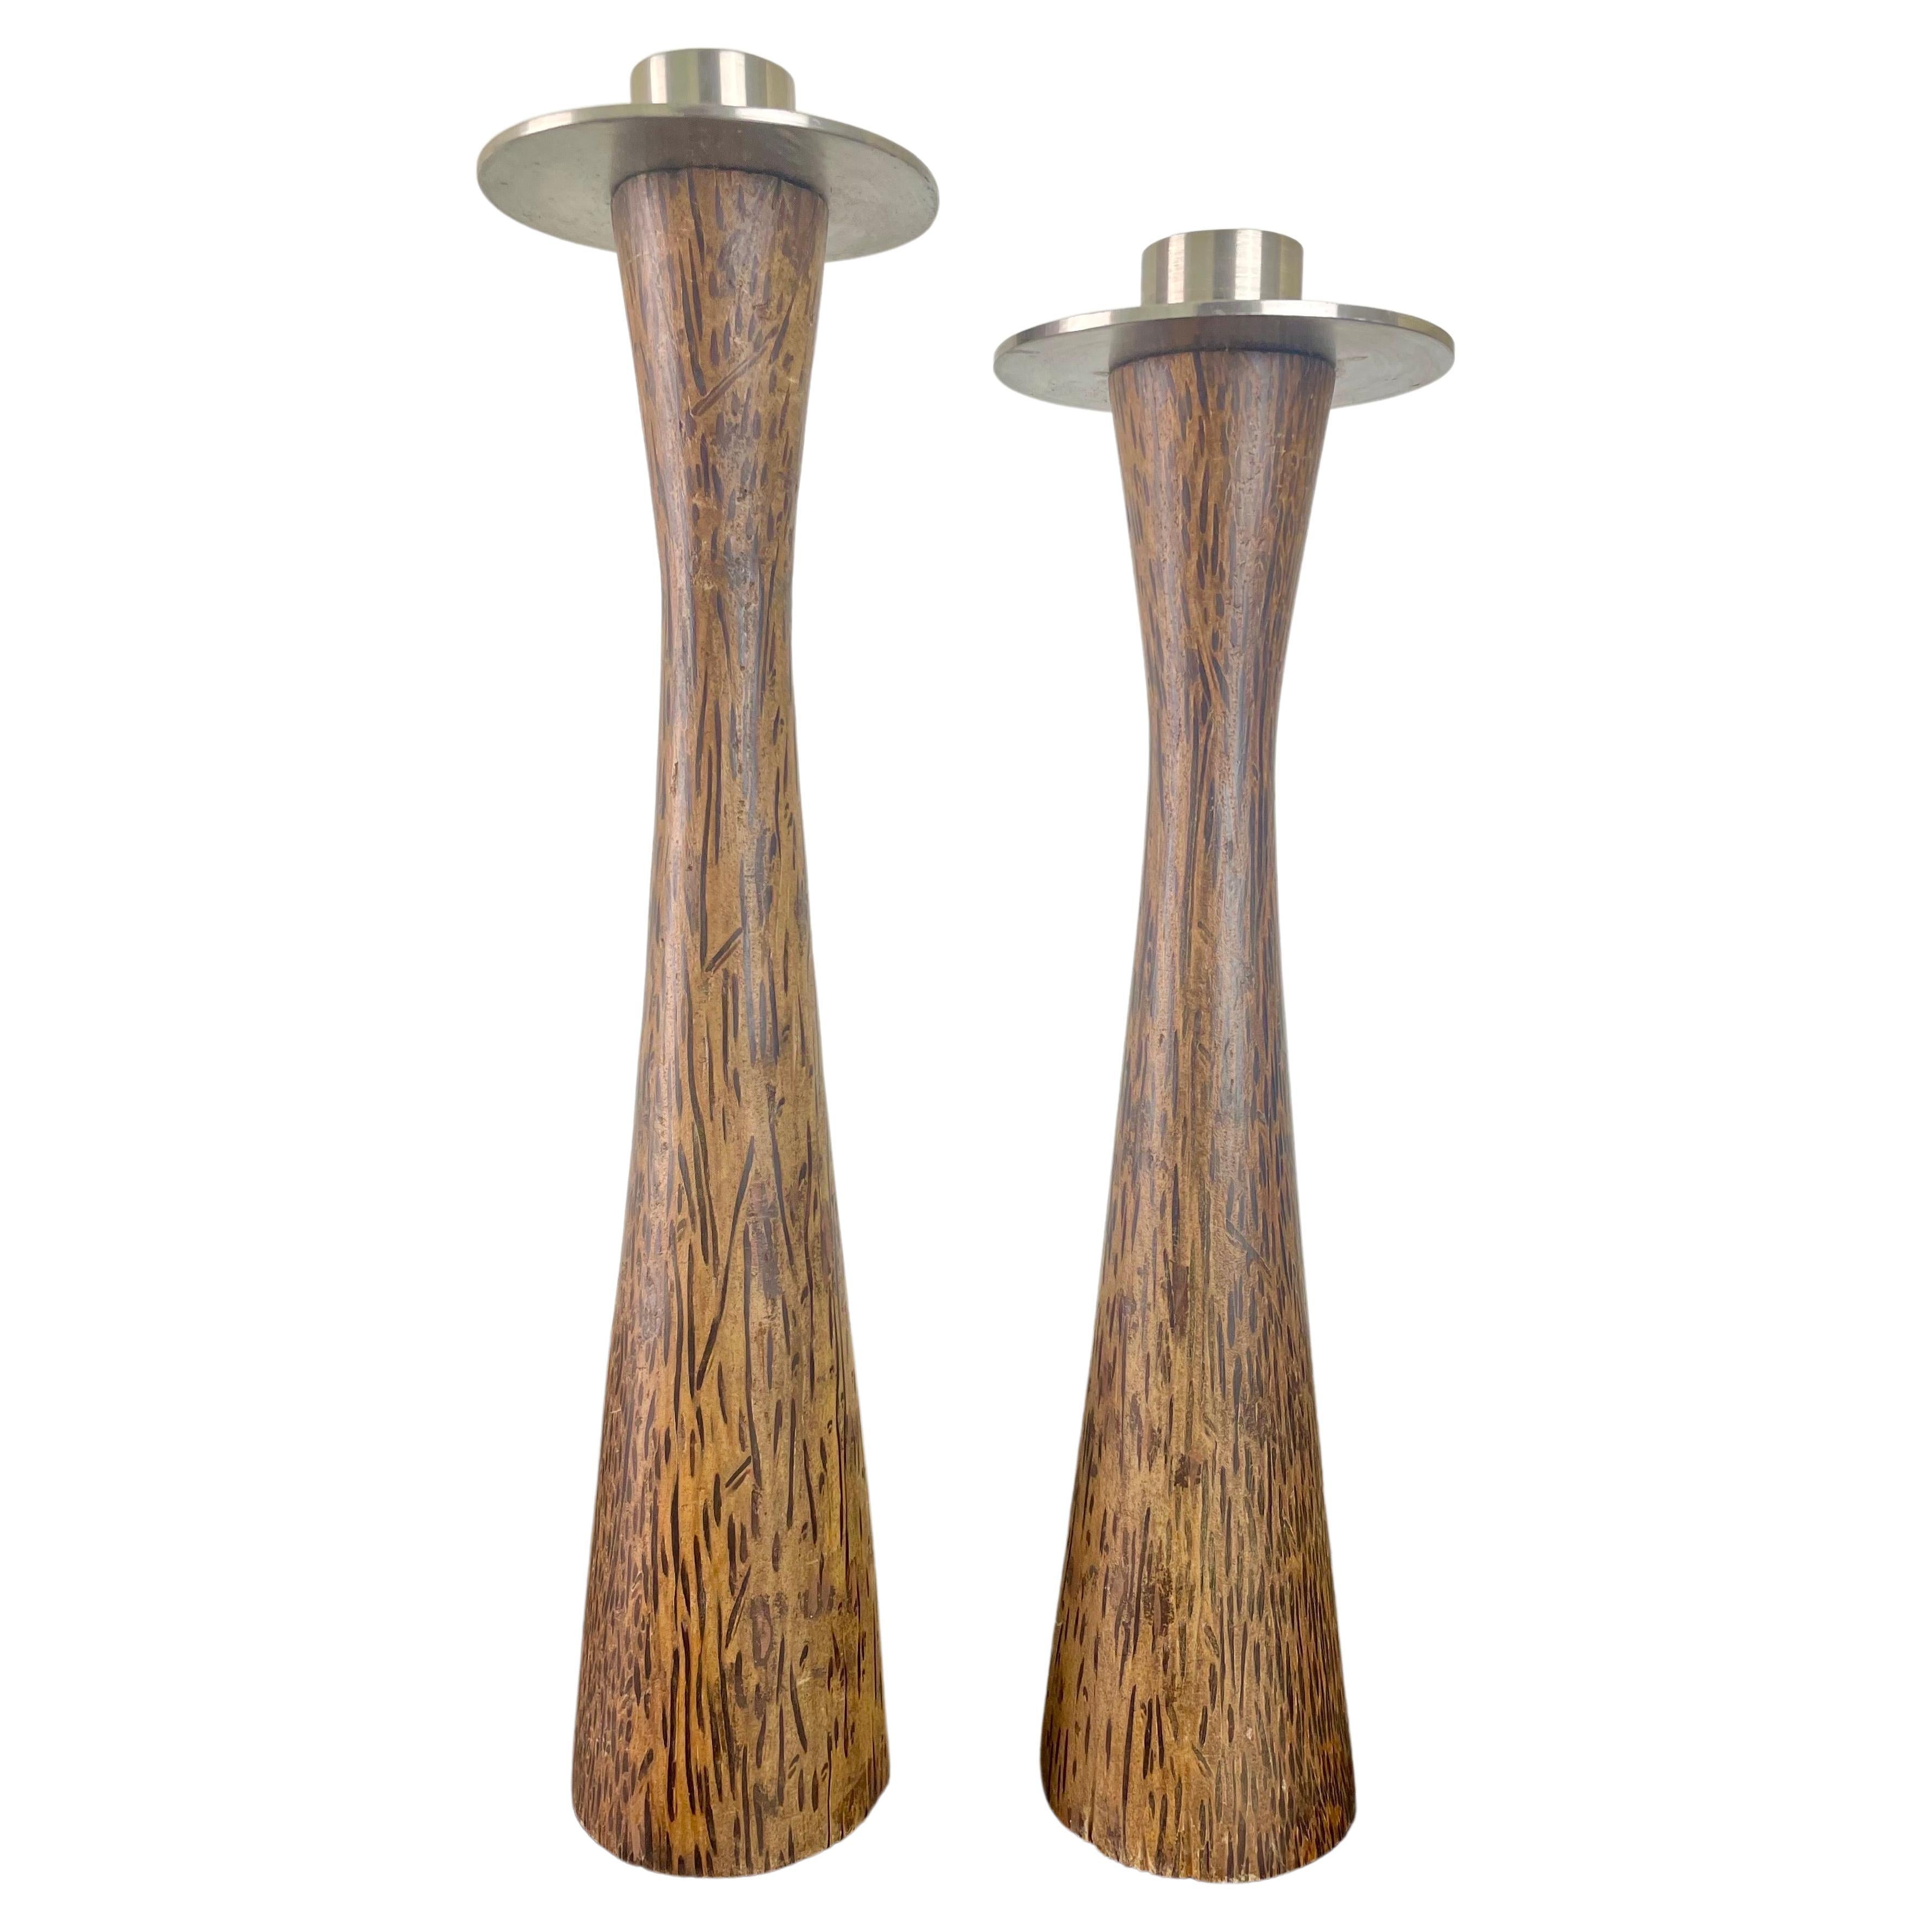 Scandinavian candlesticks in turned teak wood - Denmark or Sweden For Sale